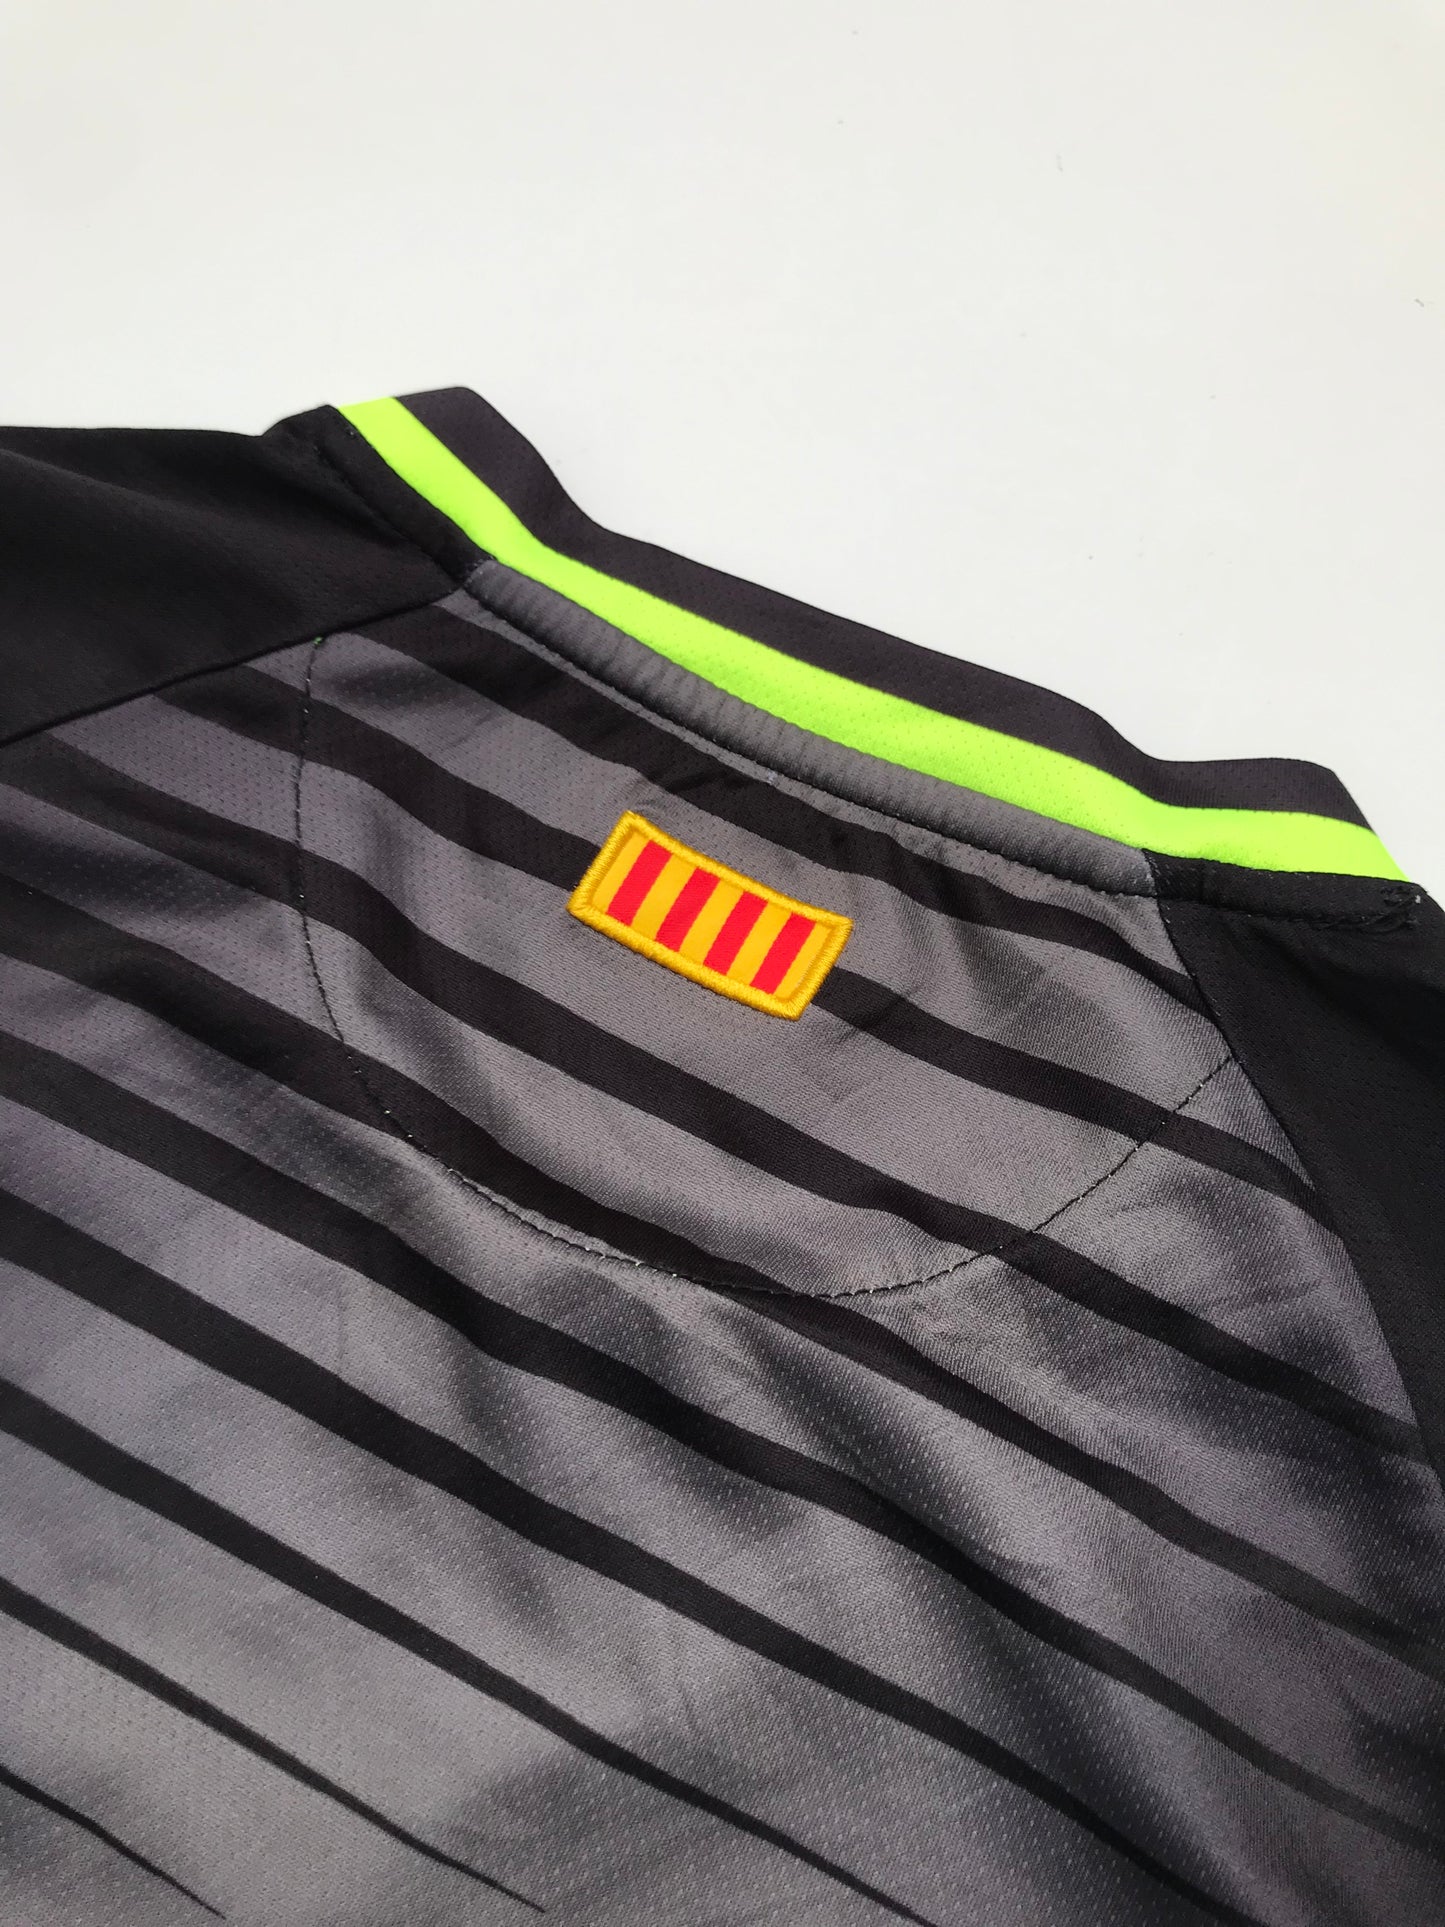 Espanyol de Barcelona Goalkeeper Jersey 2018 2019 (M)